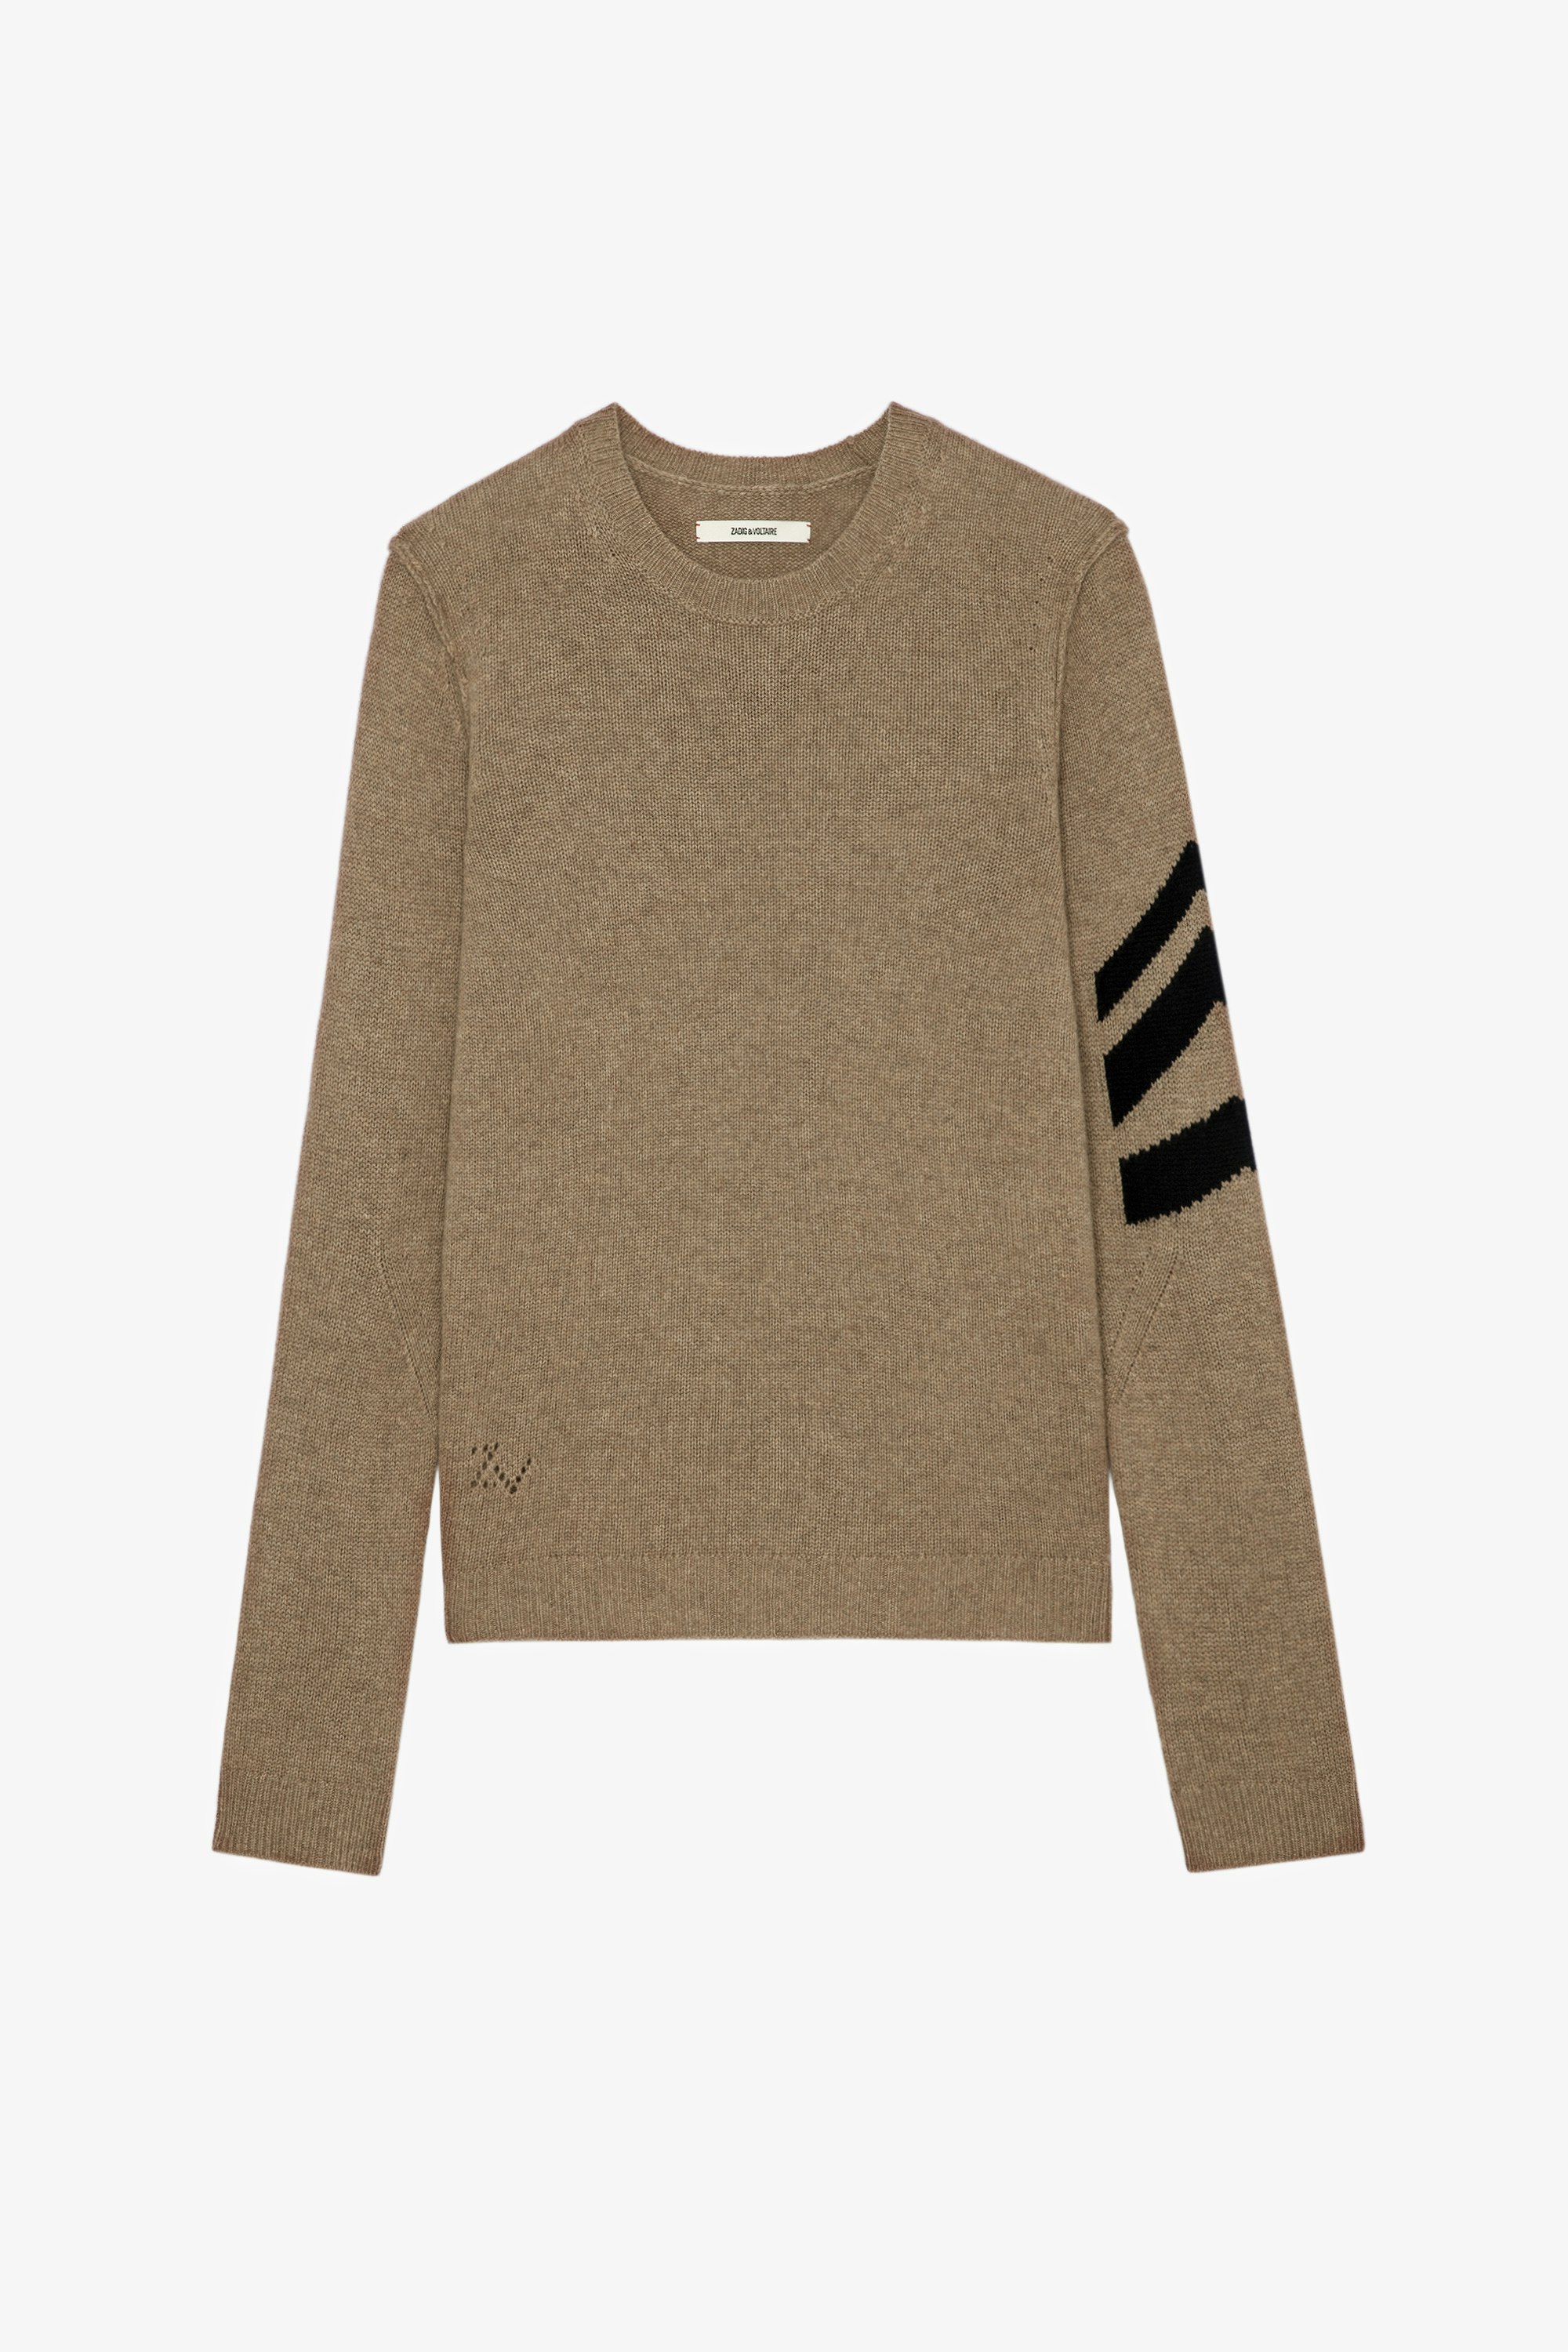 Kennedy Arrow Cashmere Sweater Men’s cognac cashmere jumper featuring arrows on the sleeve